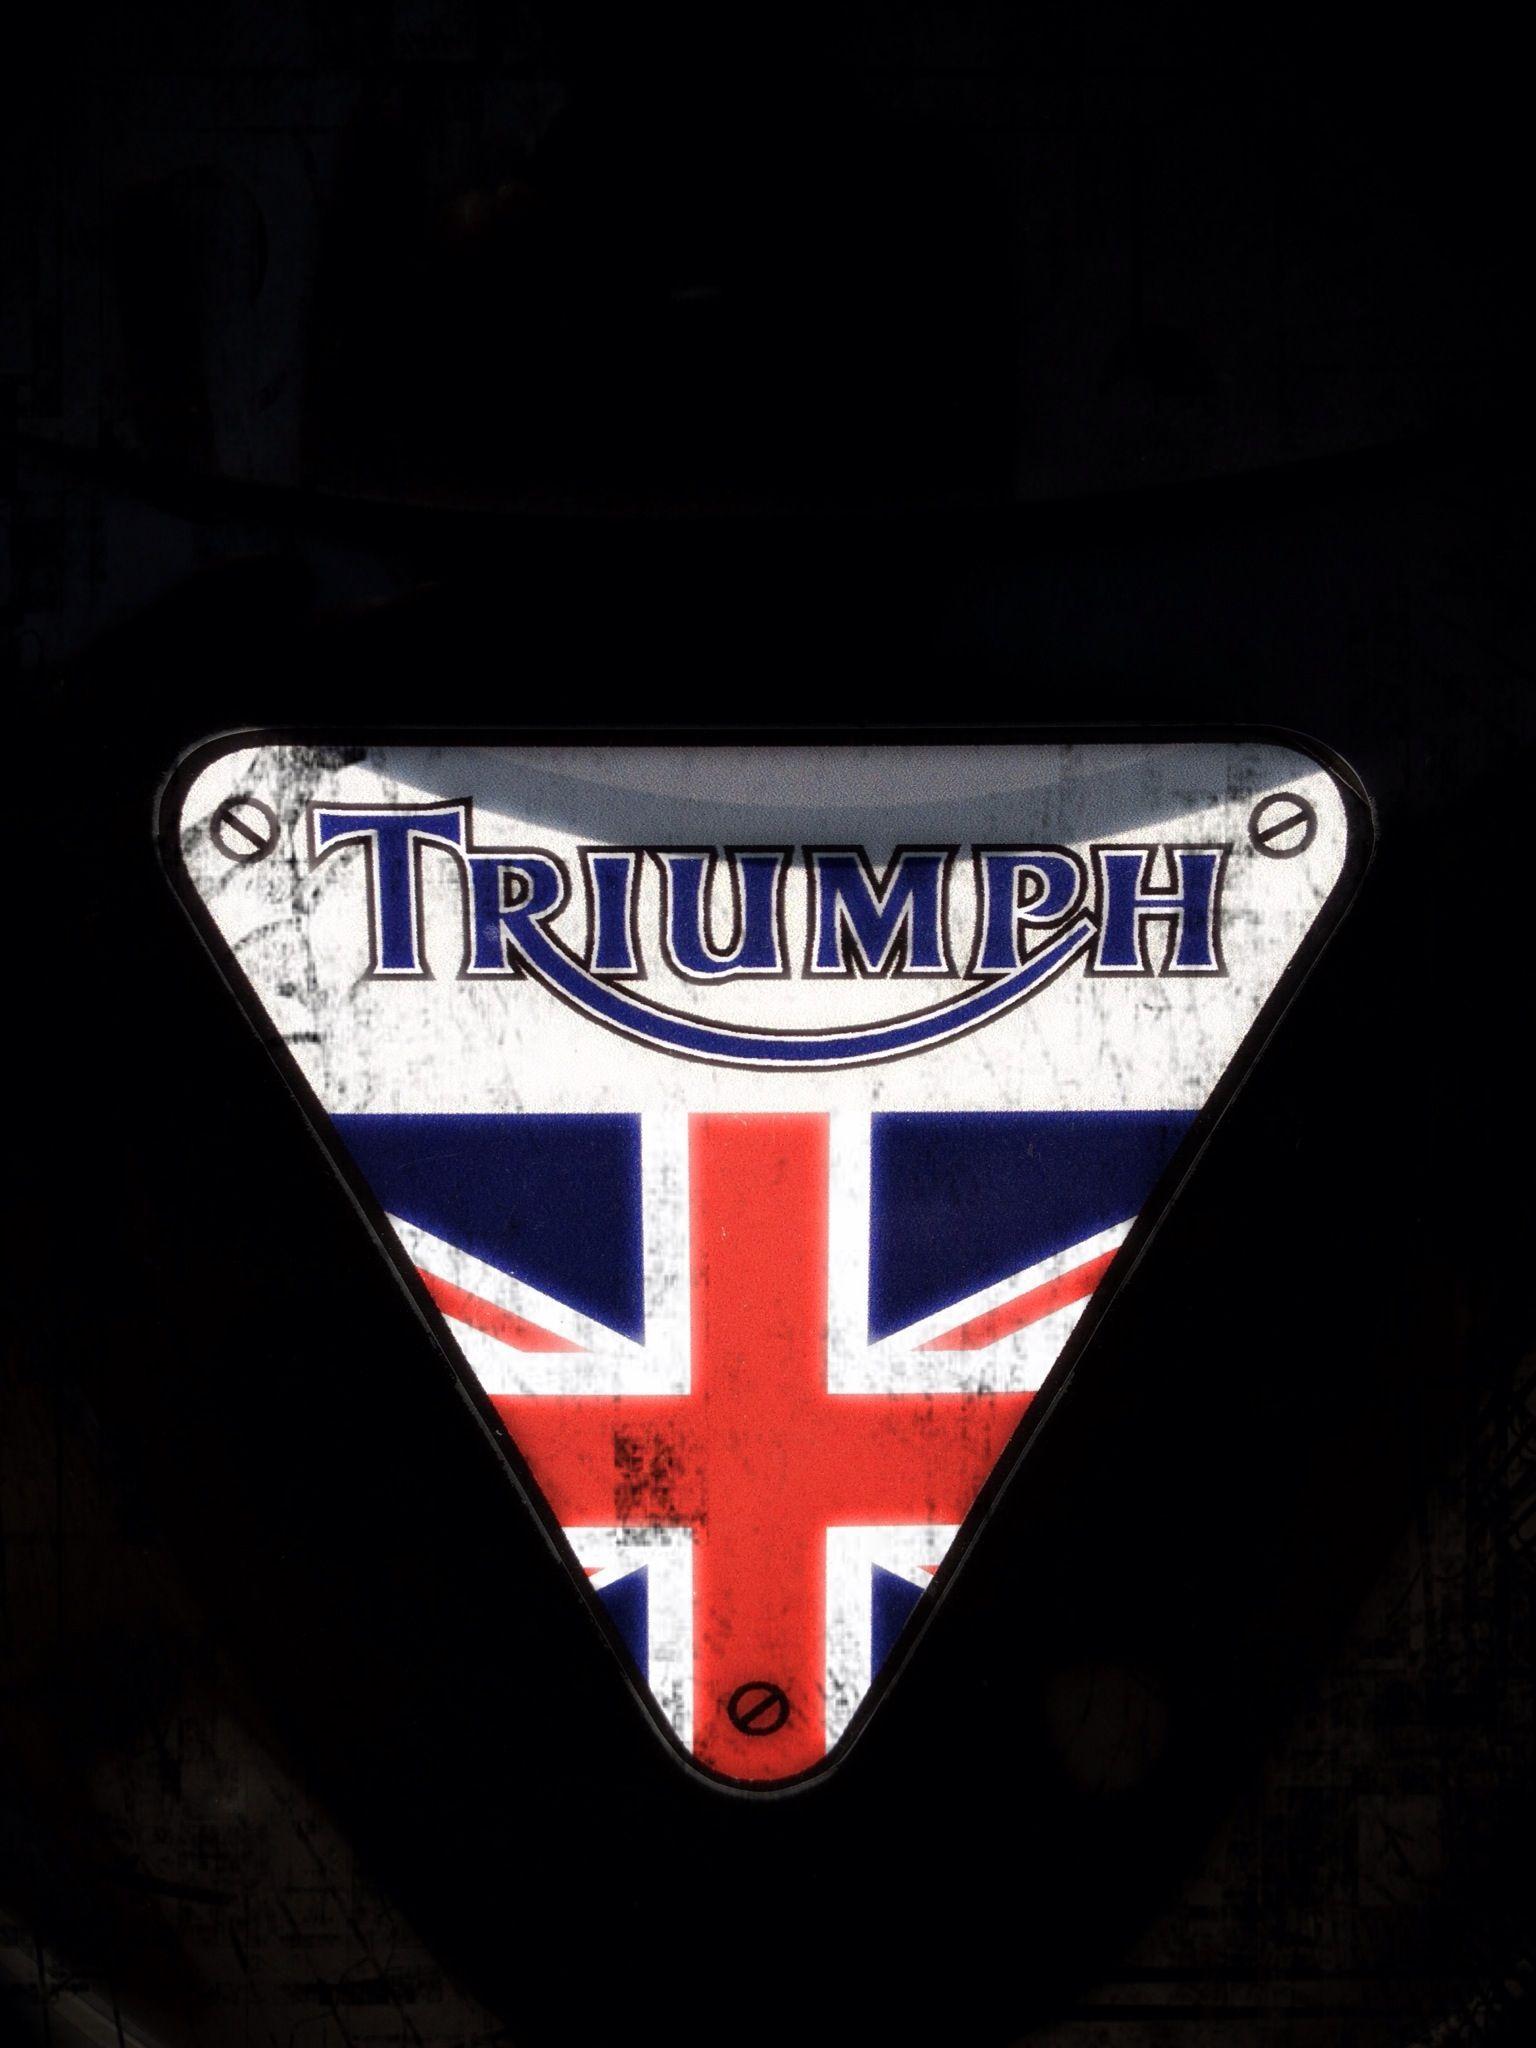 Truimph Logo - Triumph logo. Motostories. Triumph motorcycles, Triumph logo